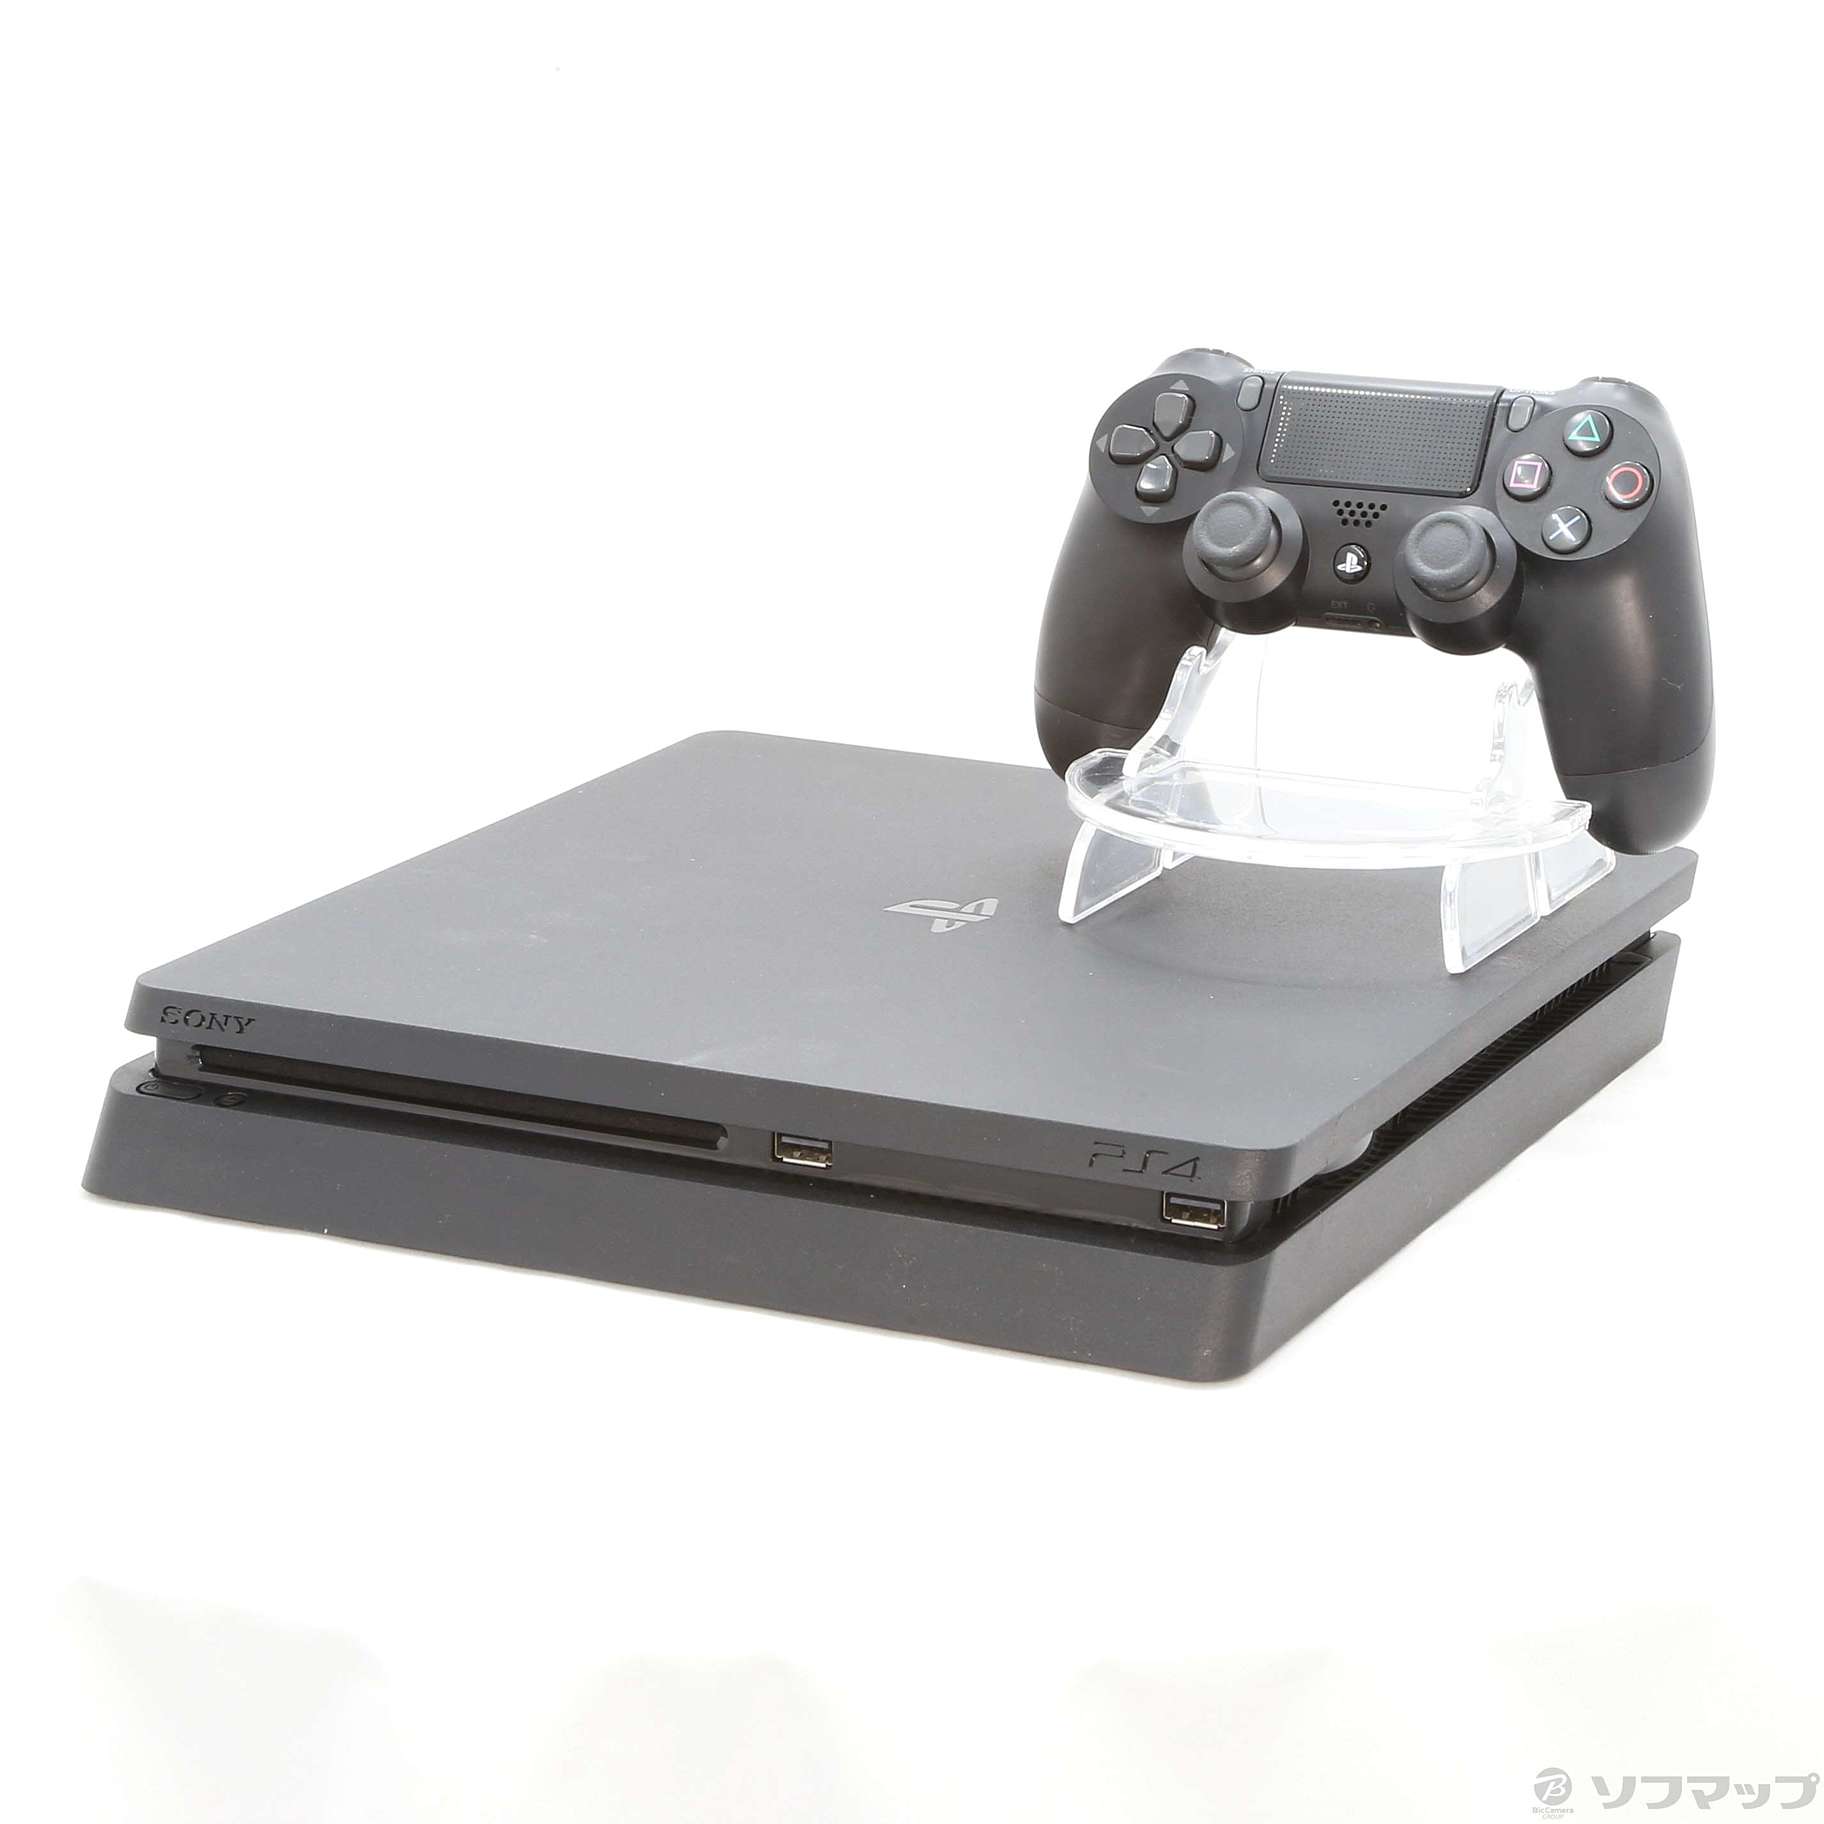 PlayStation 4 MONSTER HUNTER: WORLD Starter Pack Black (CUHJ-10022)【メーカー生産終了】/【PlayStation 4】